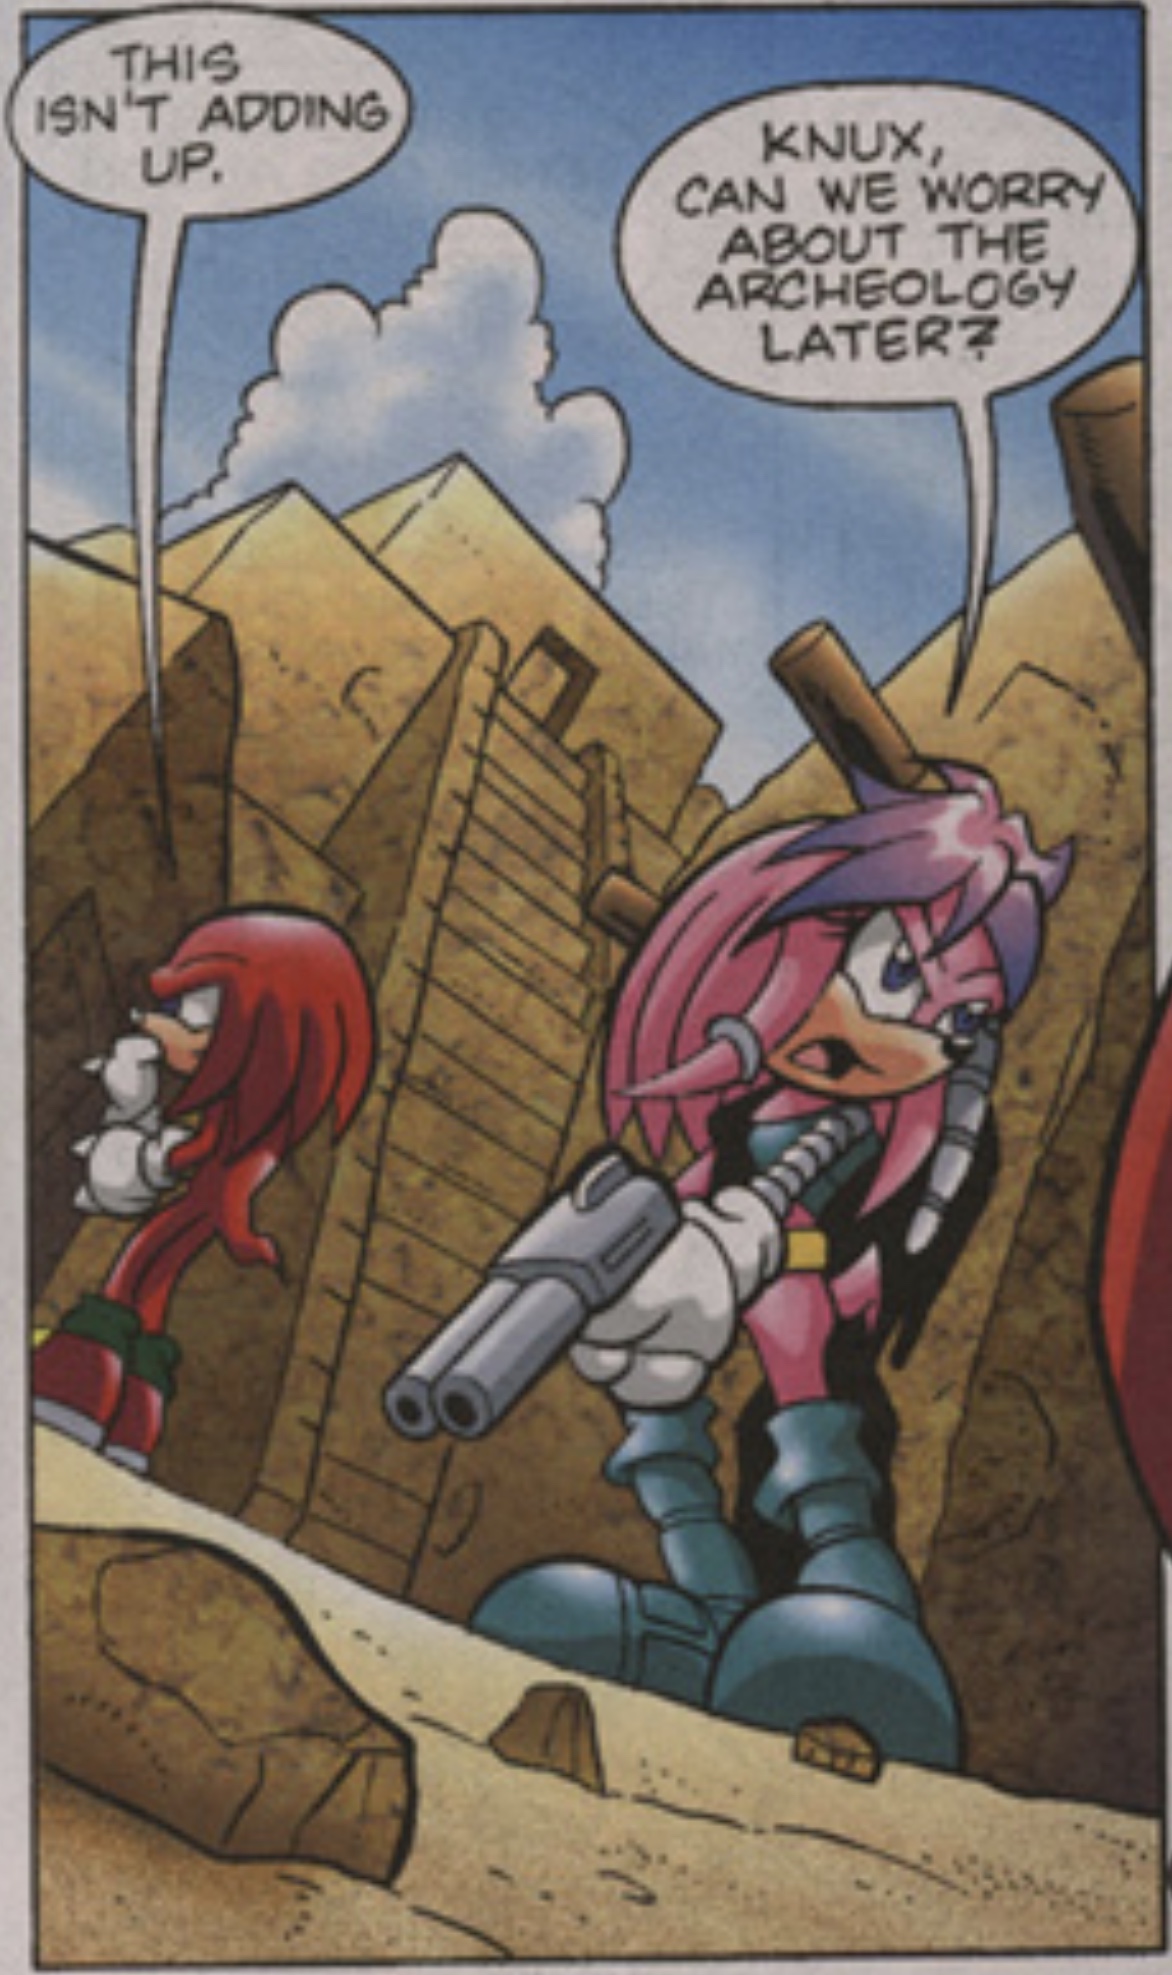 Julie-Su (Dark Mobius) (Sonic the Hedgehog) - Archie Comics